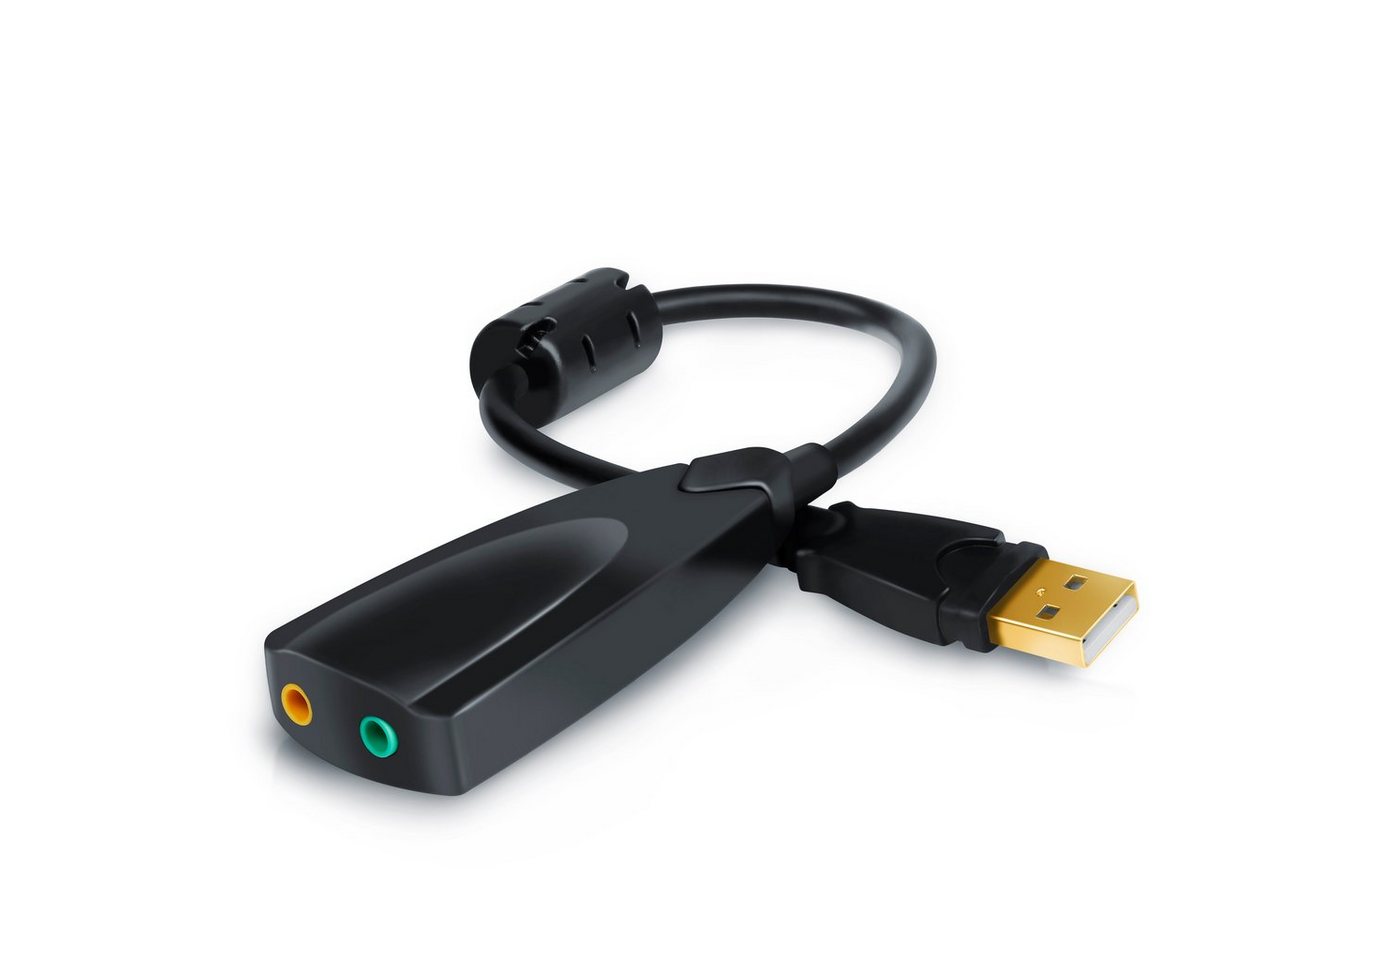 Aplic USB-Soundkarte Virtual 7.1 Surround, extern - Windows 10 & Mac OS X kompatibel von Aplic